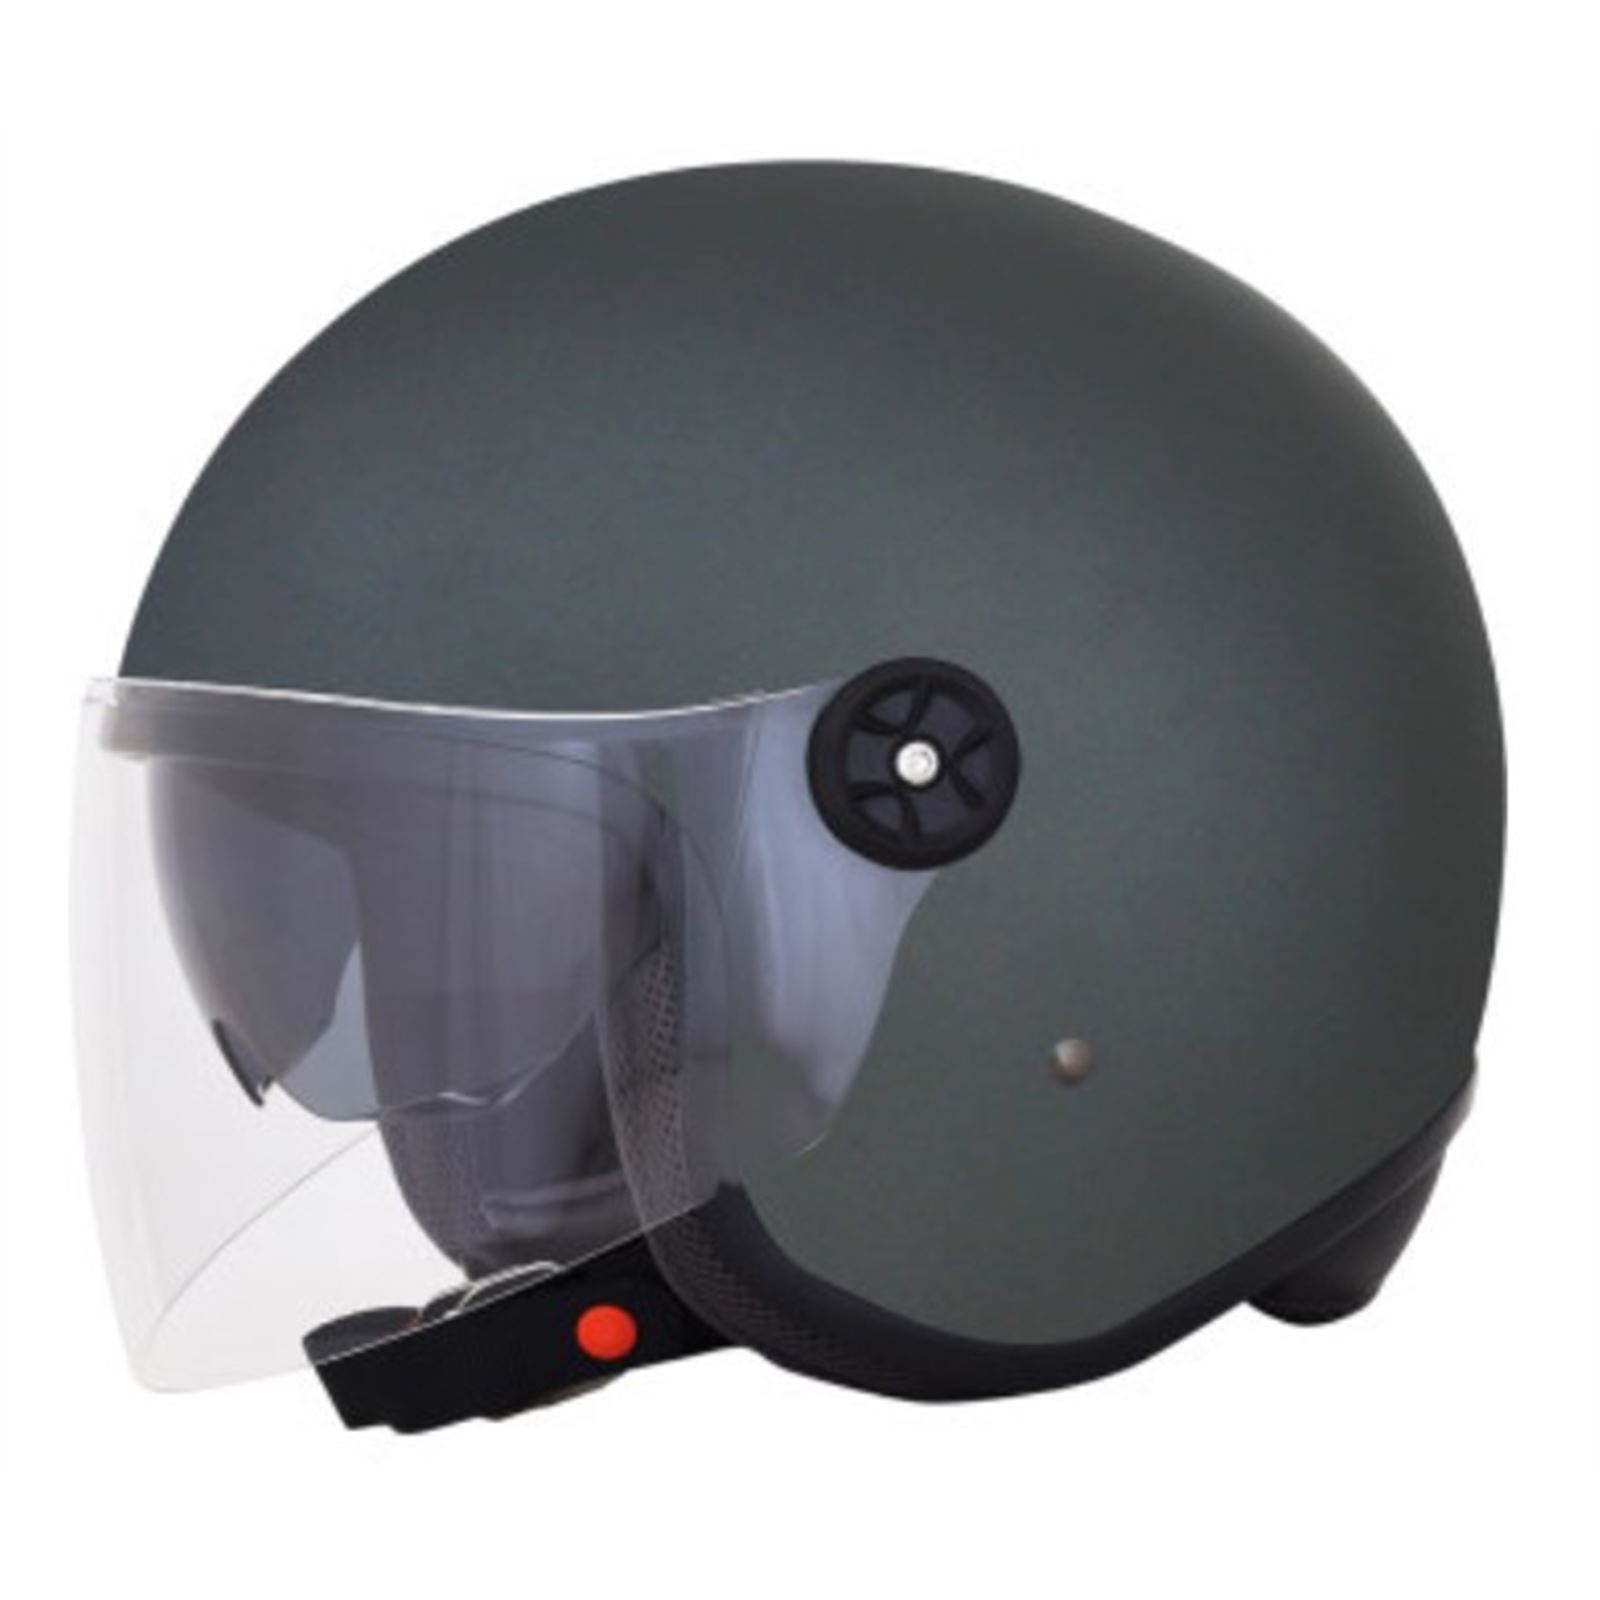 AFX FX-143 Helmet - Frost Grey - Medium